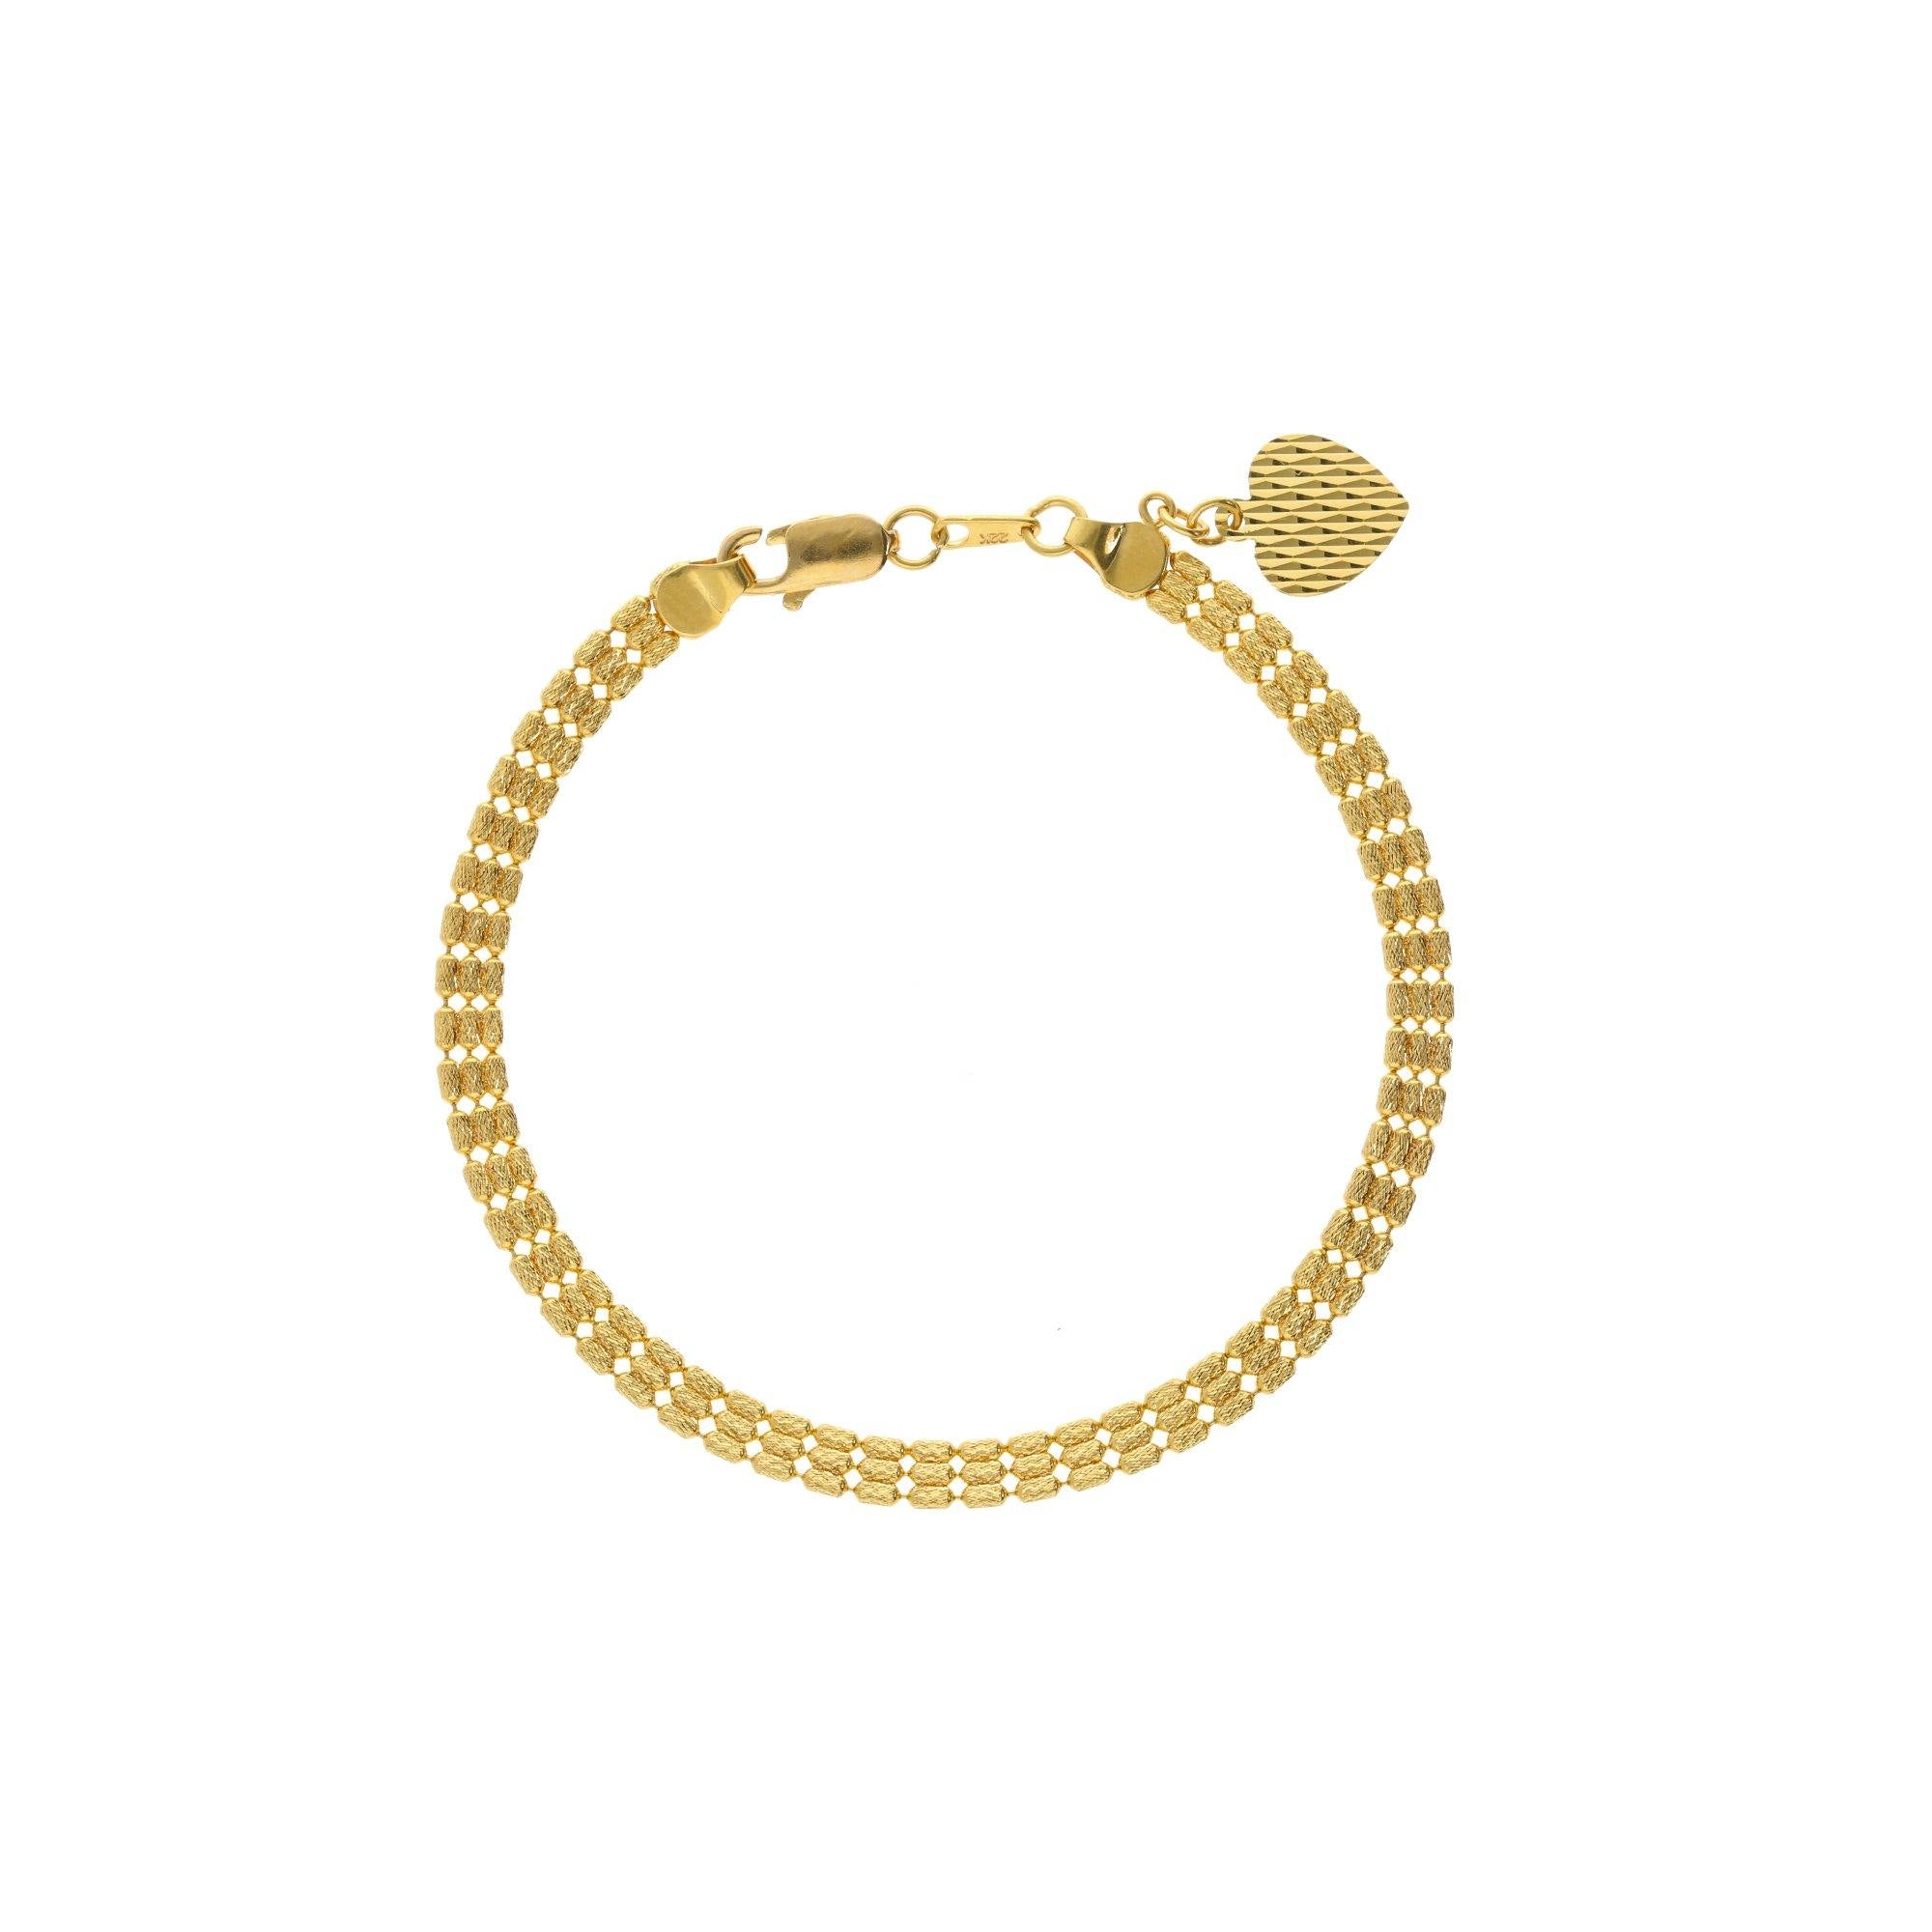 22 Carat Gold Bracelet With Antique Finish | PureJewels